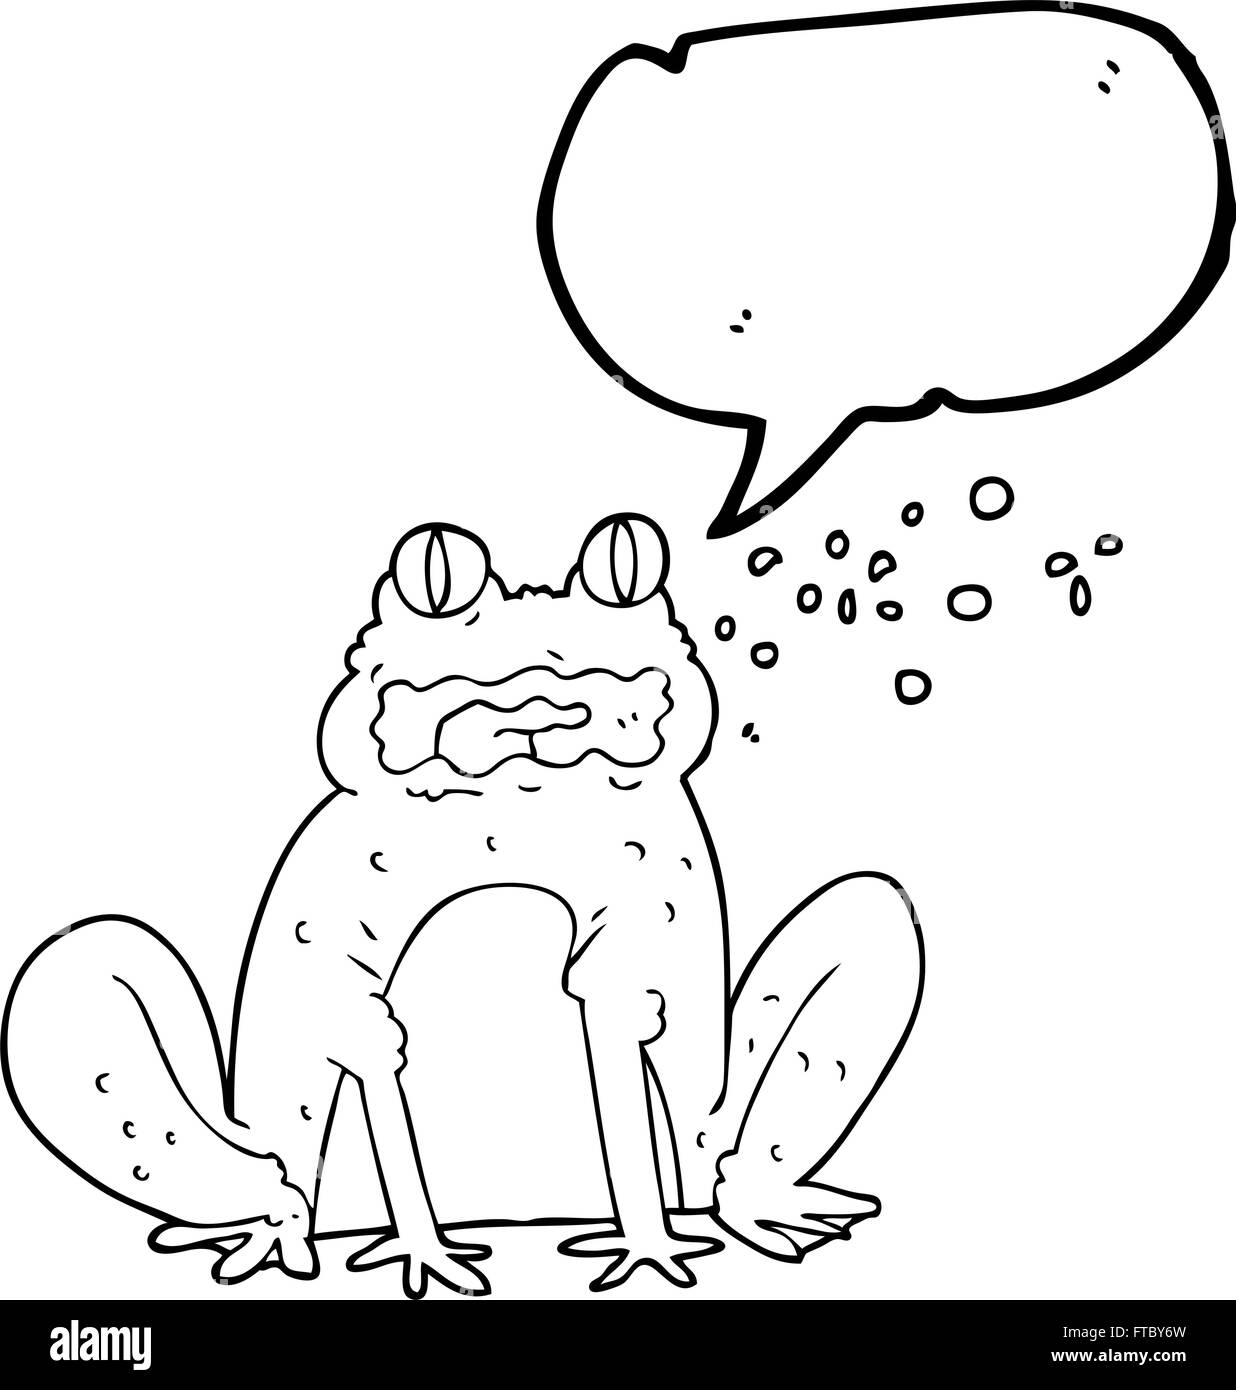 freehand drawn speech bubble cartoon burping frog Stock Vector